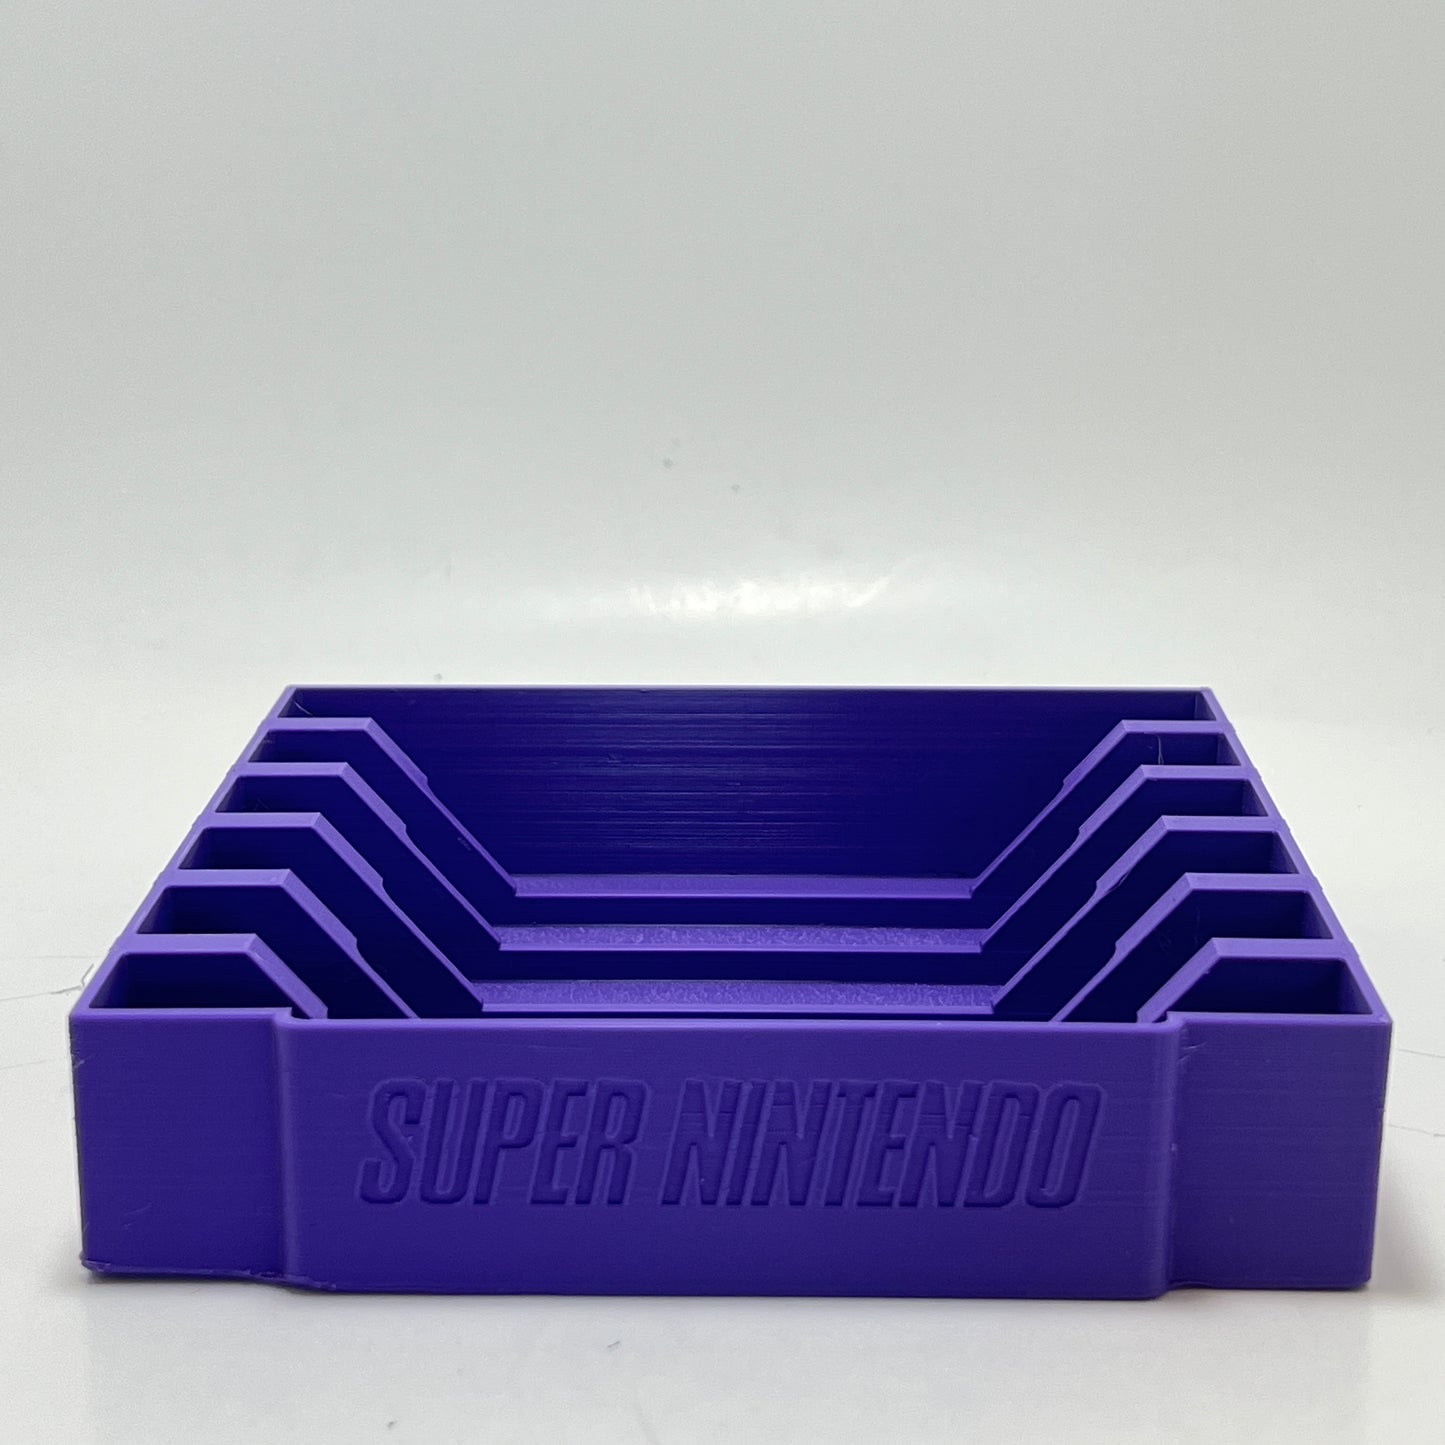 Super Nintendo Six Cartridge Storage Tray